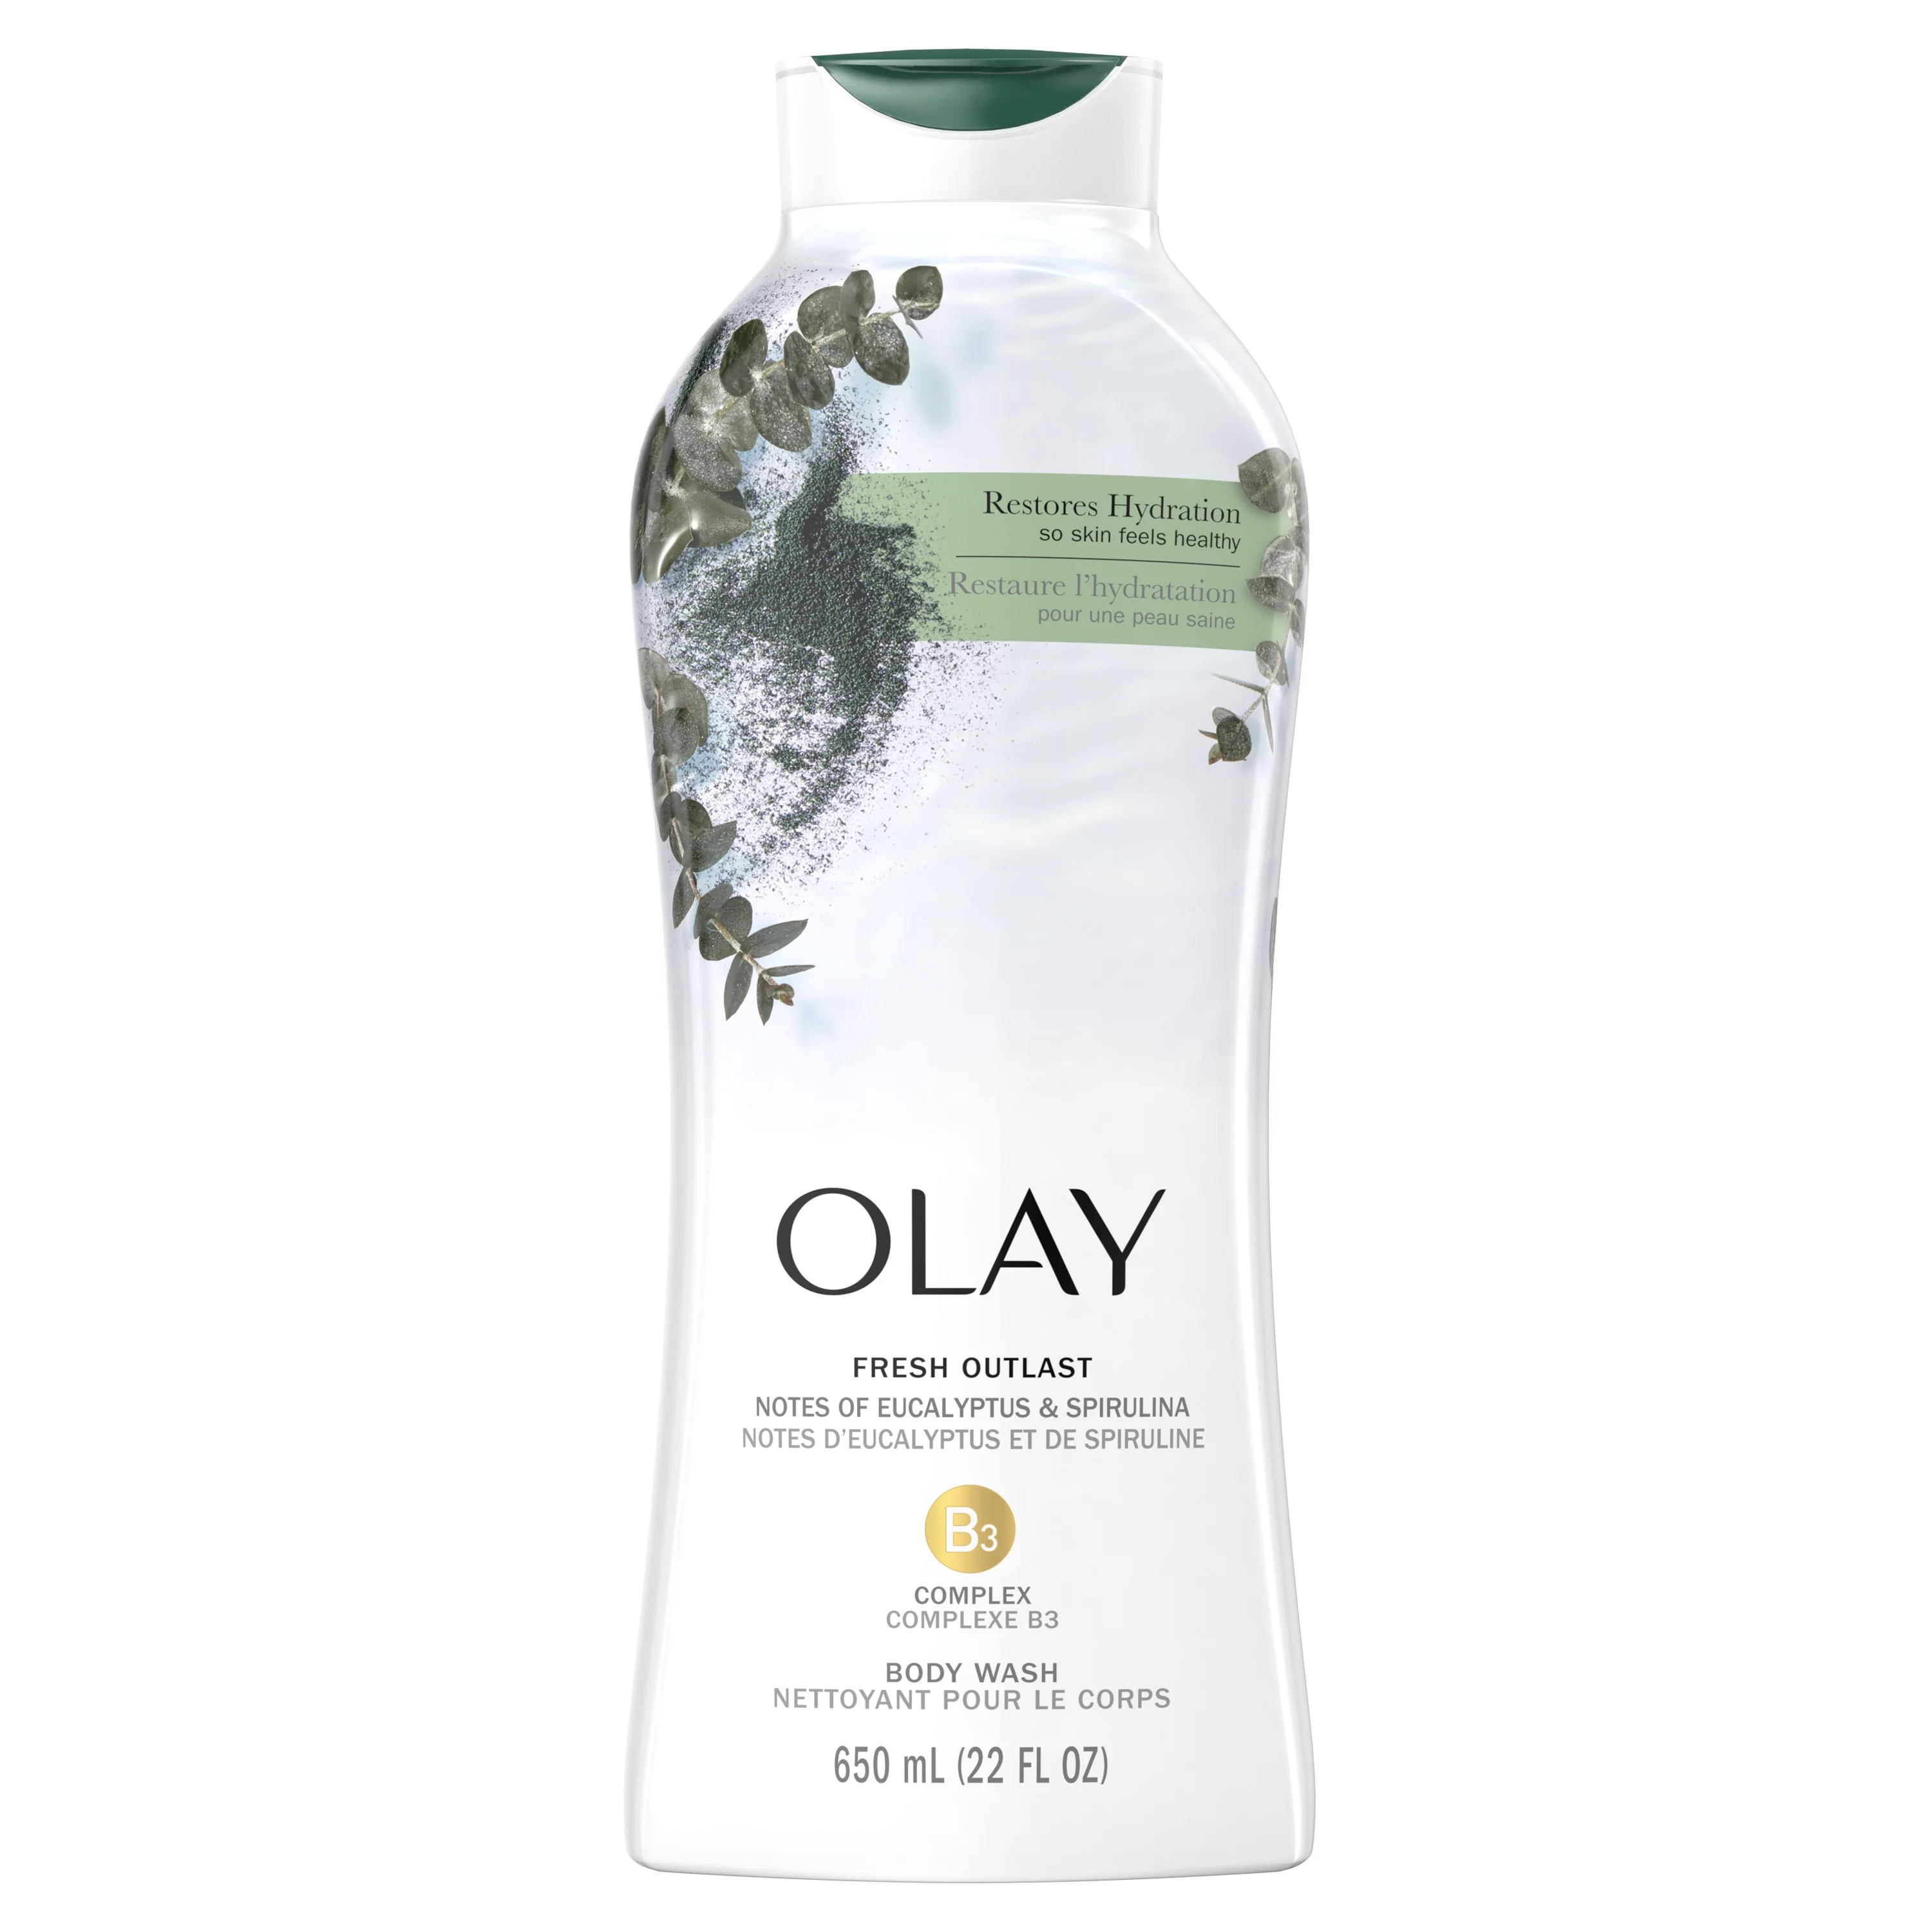 Olay Fresh Outlast Paraben Free Body Wash with Eucalyptus and Spirulina, All Skin Types, 22 fl oz